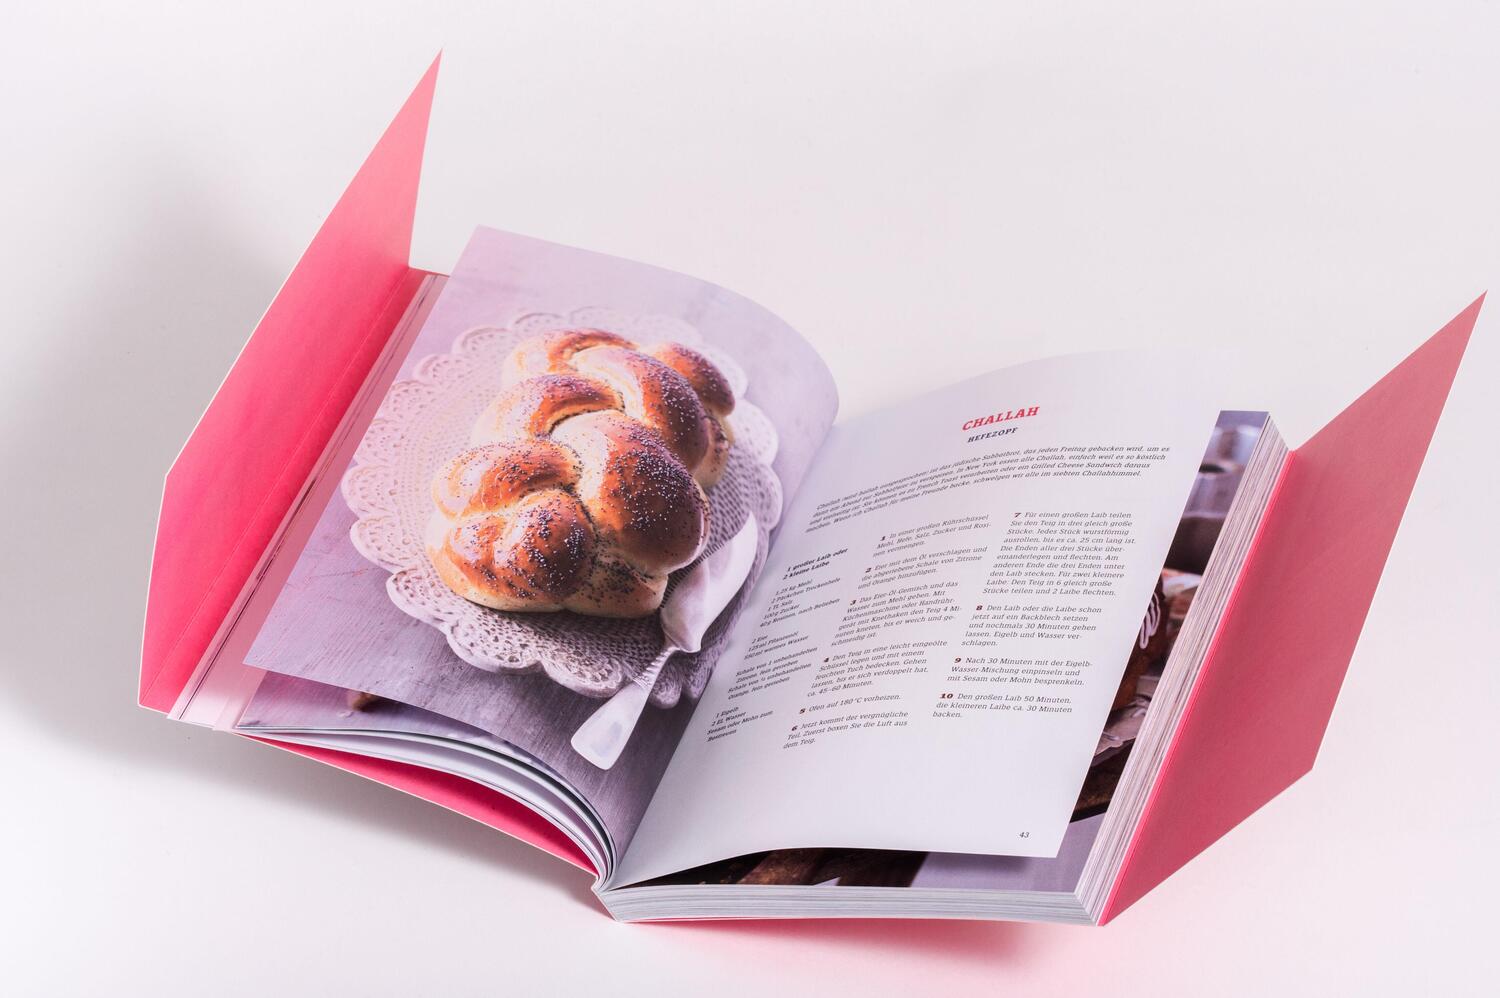 Bild: 9783442179886 | Best of Baking | Cynthia Barcomi (u. a.) | Taschenbuch | 240 S. | 2023